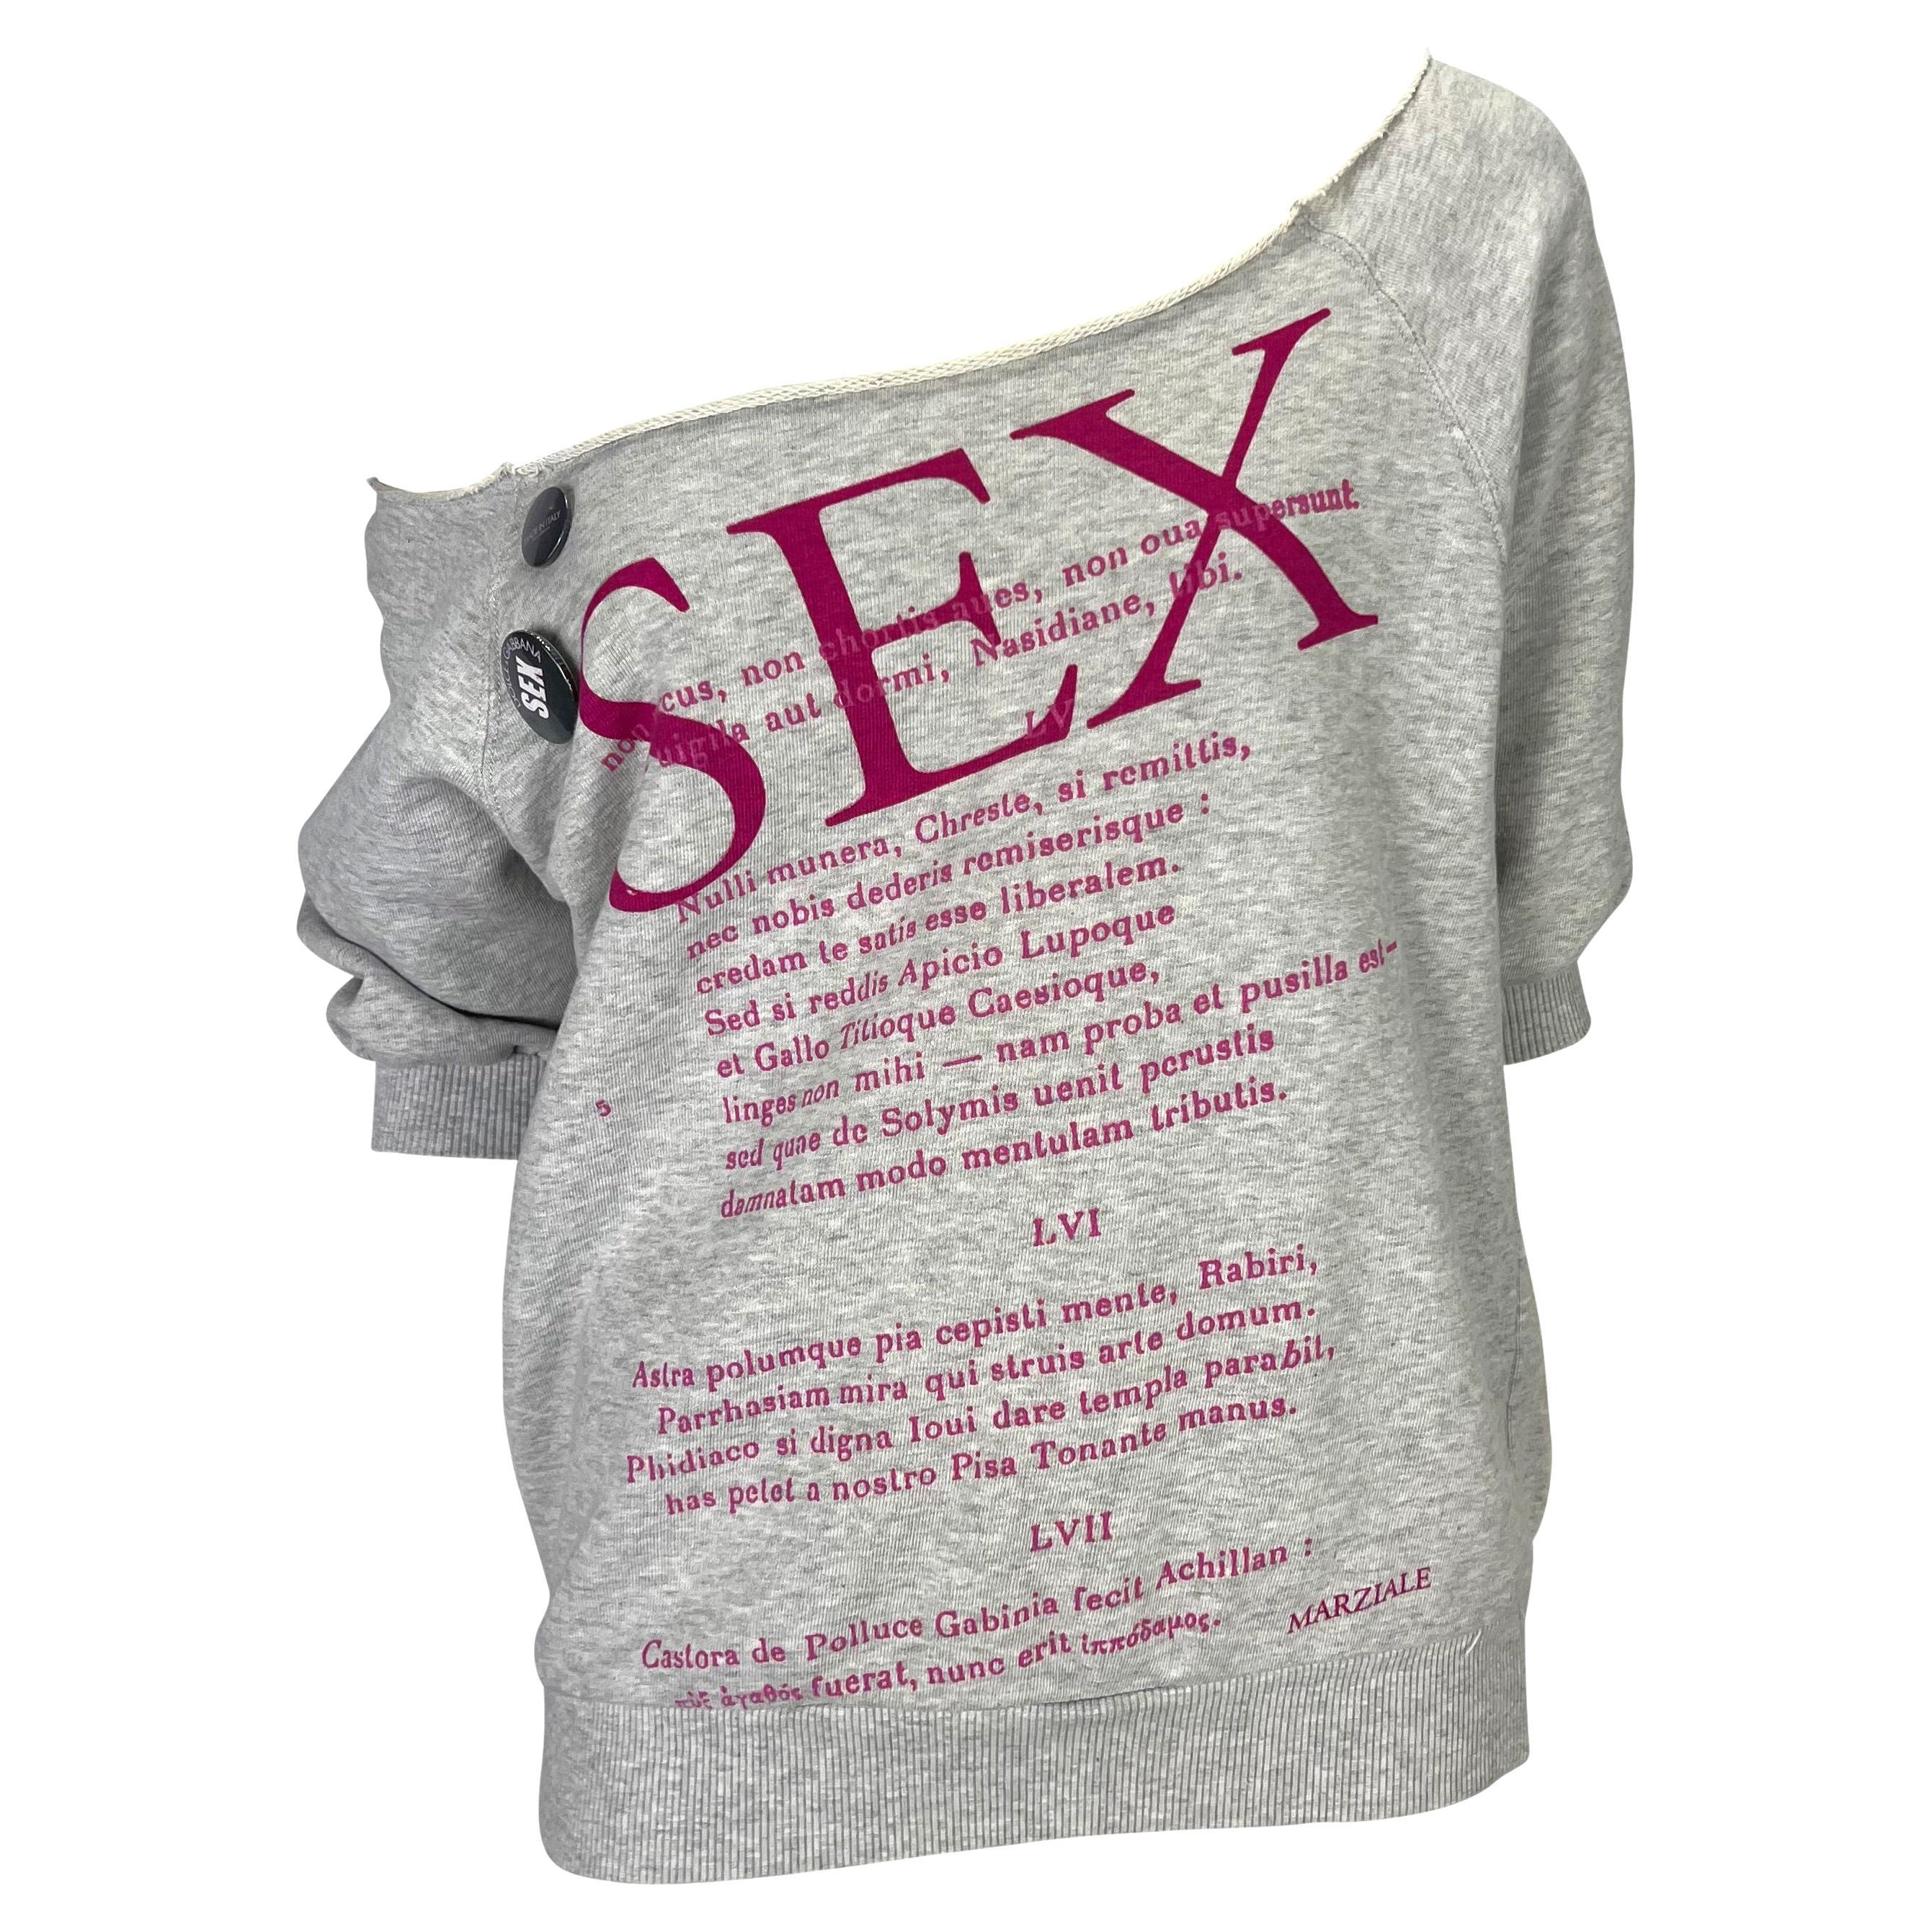 F/S 2003 Dolce & Gabbana 'Sex & Love' Laufsteg Print Pin Cropped Sweatshirt Top